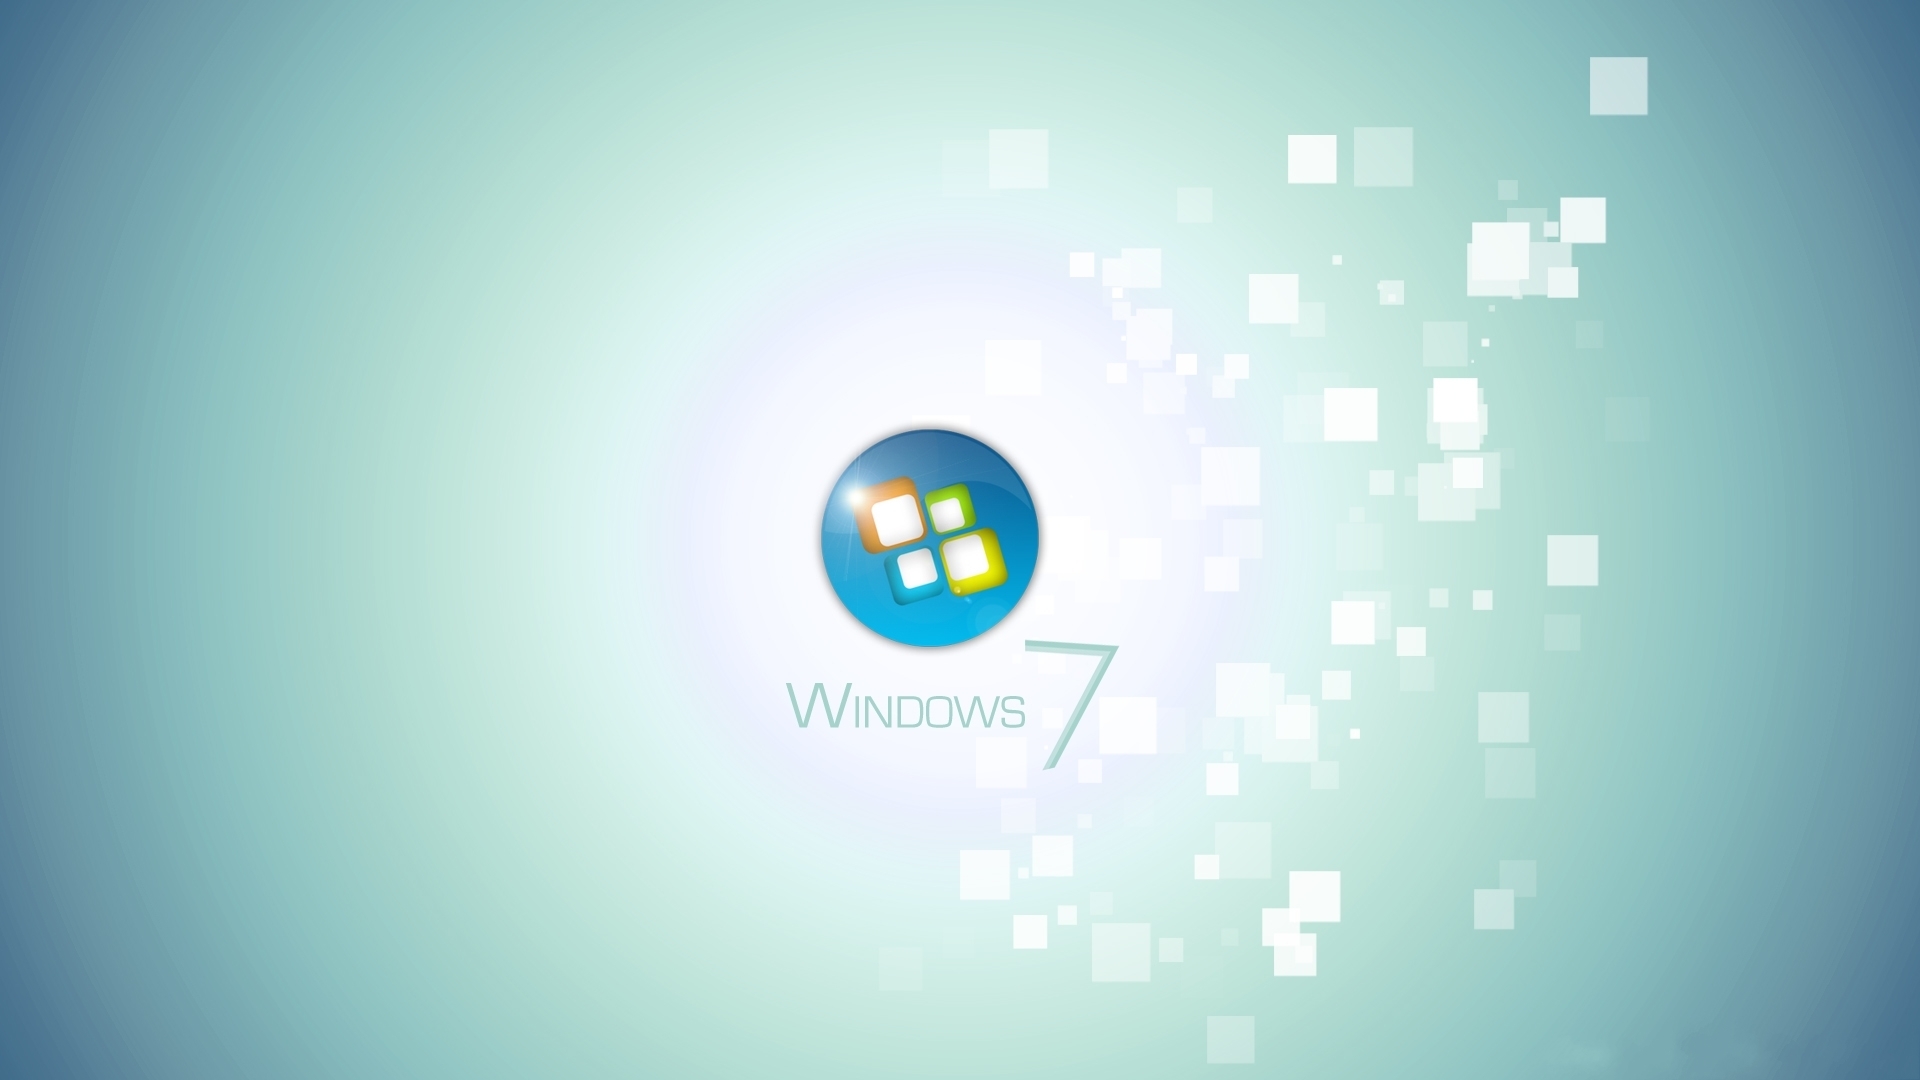 Fondos de Pantalla Windows 7 Windows Computadoras descargar imagenes